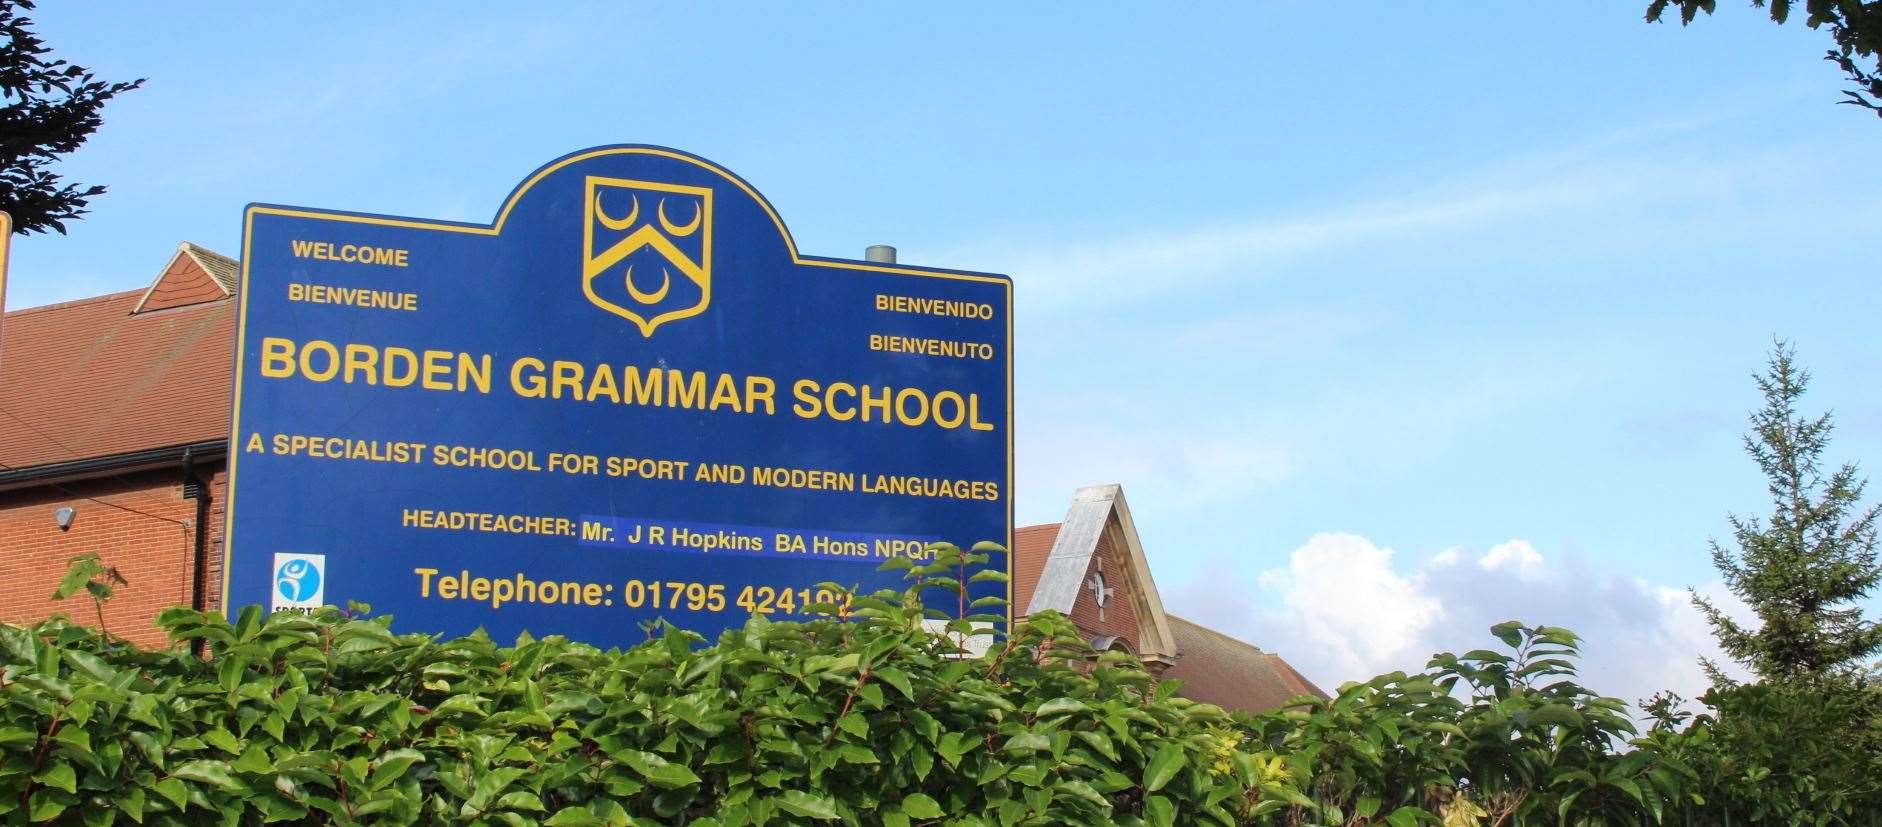 Borden Grammar School in Sittingbourne